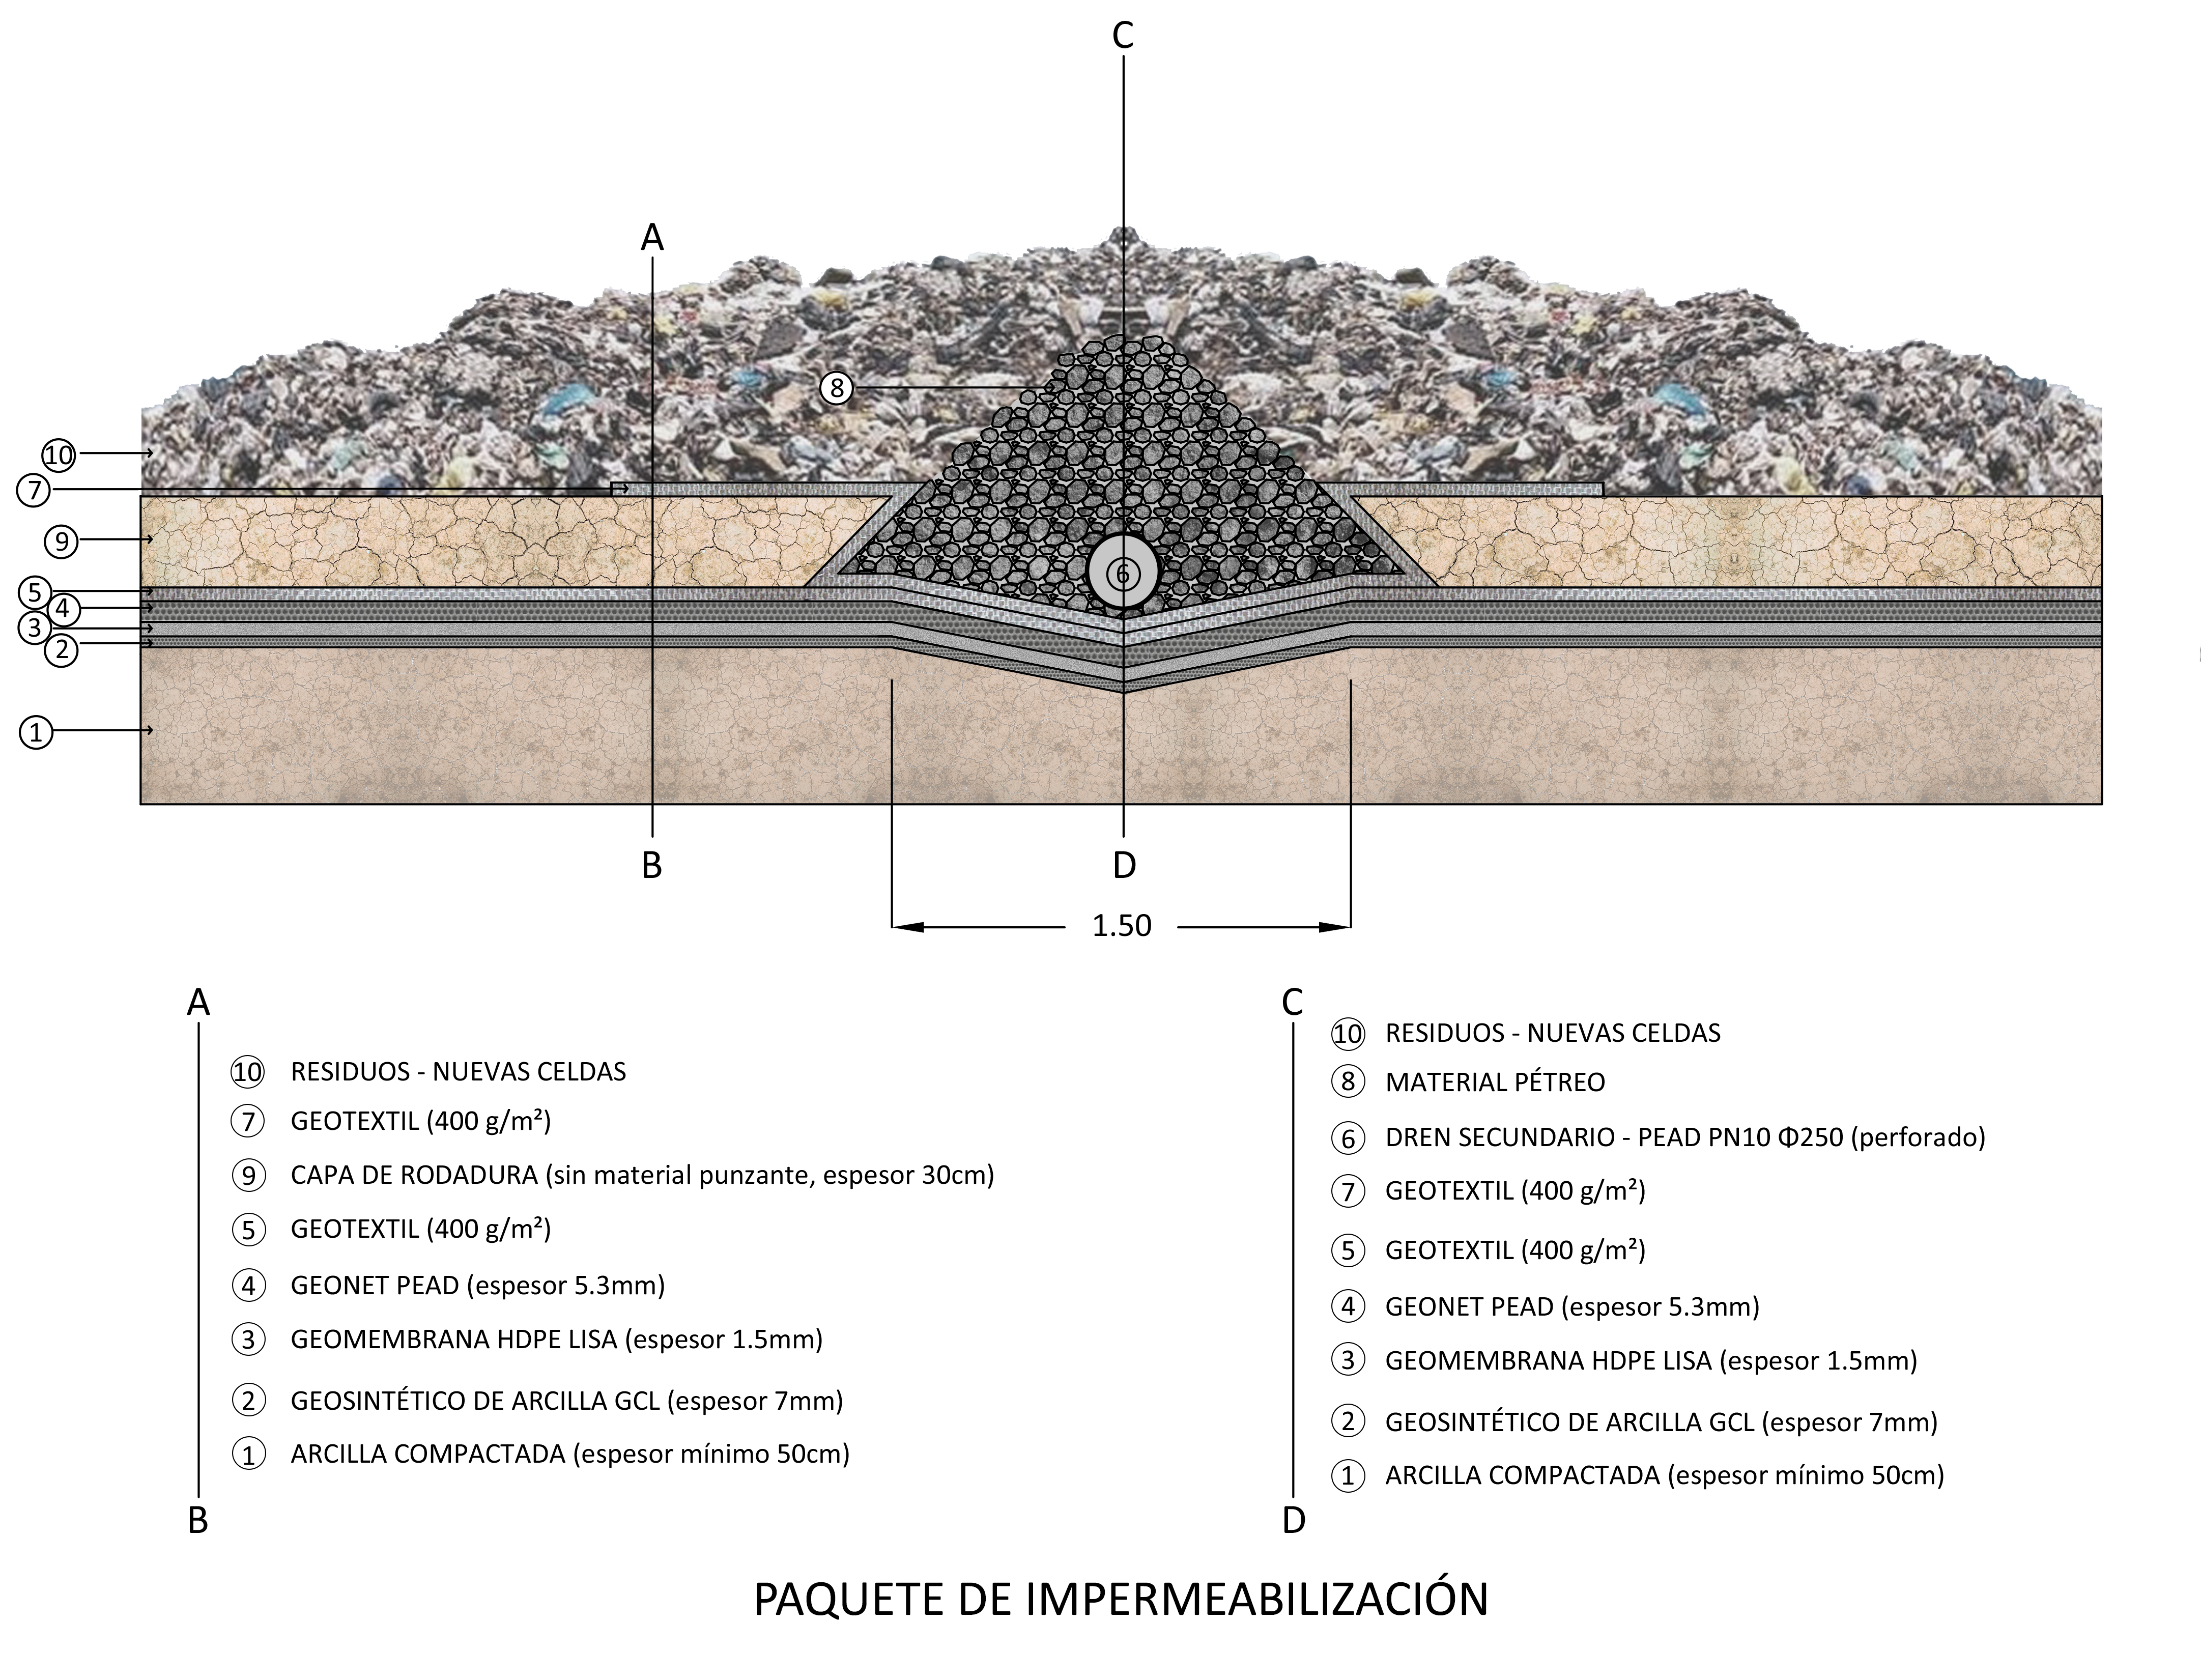 Obra de ampliación del sitio de disposición final de residuos